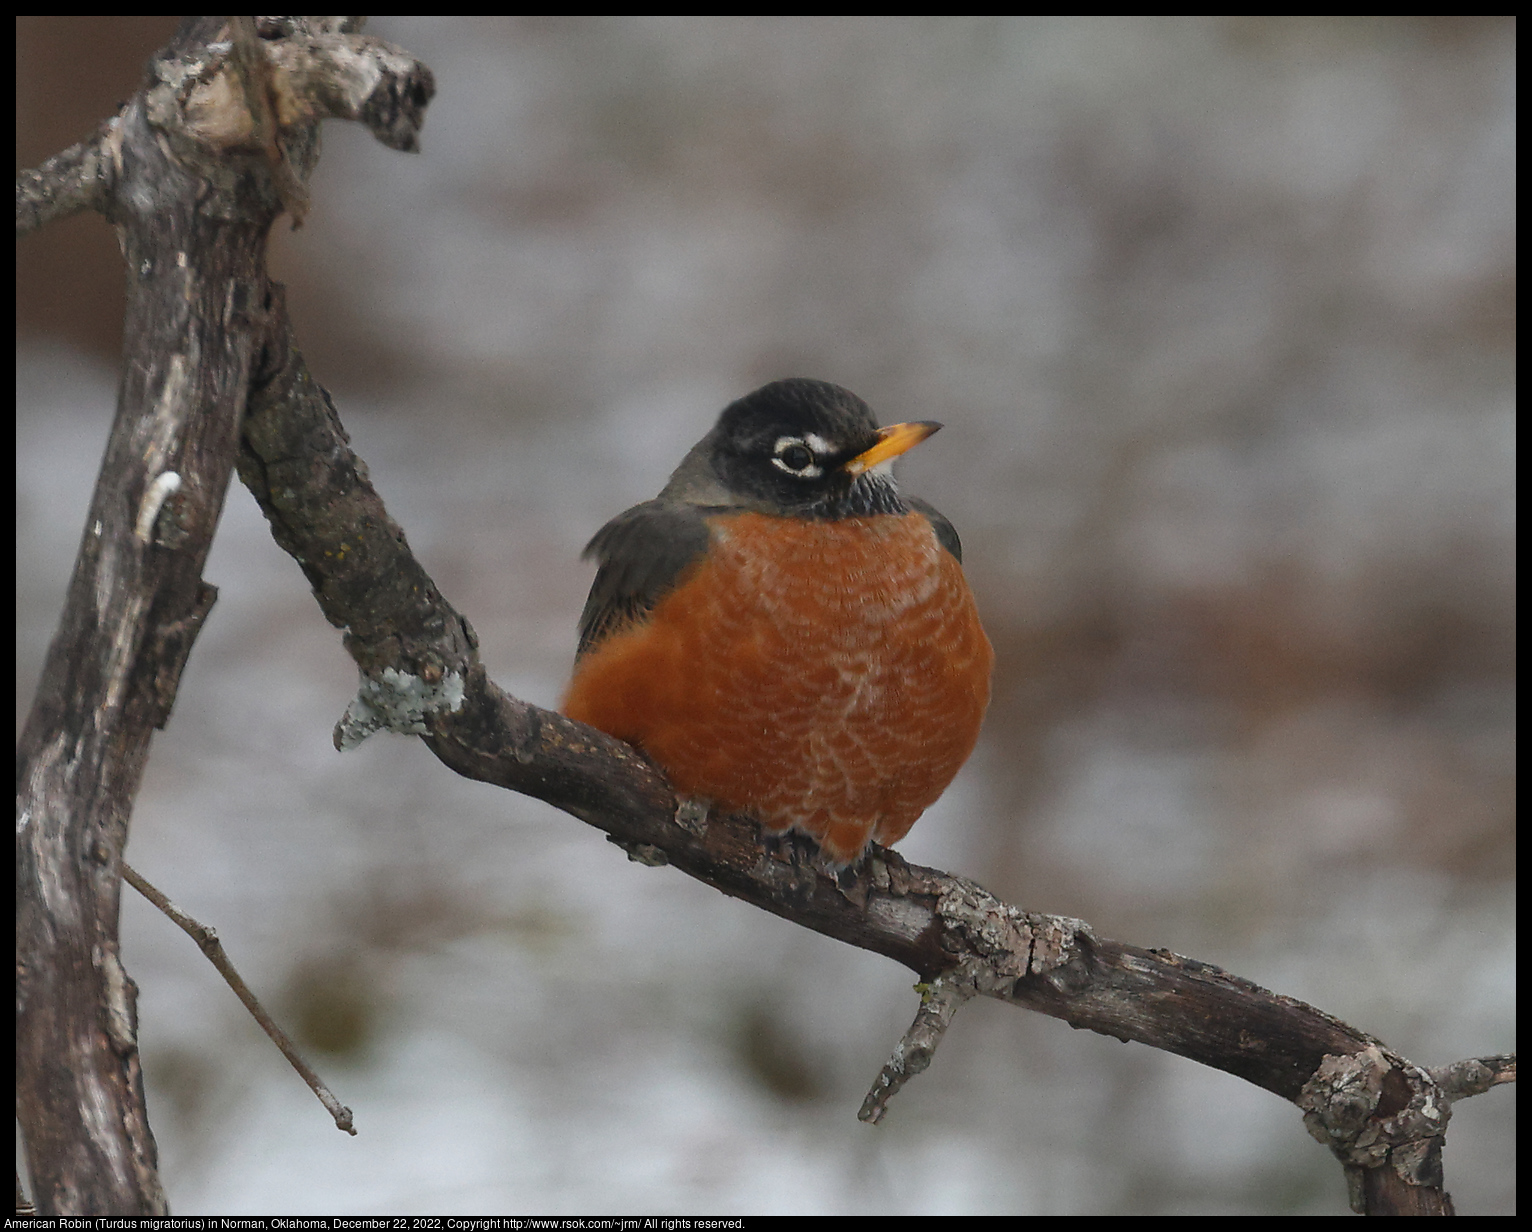 American Robin (Turdus migratorius) in Norman, Oklahoma, December 22, 2022